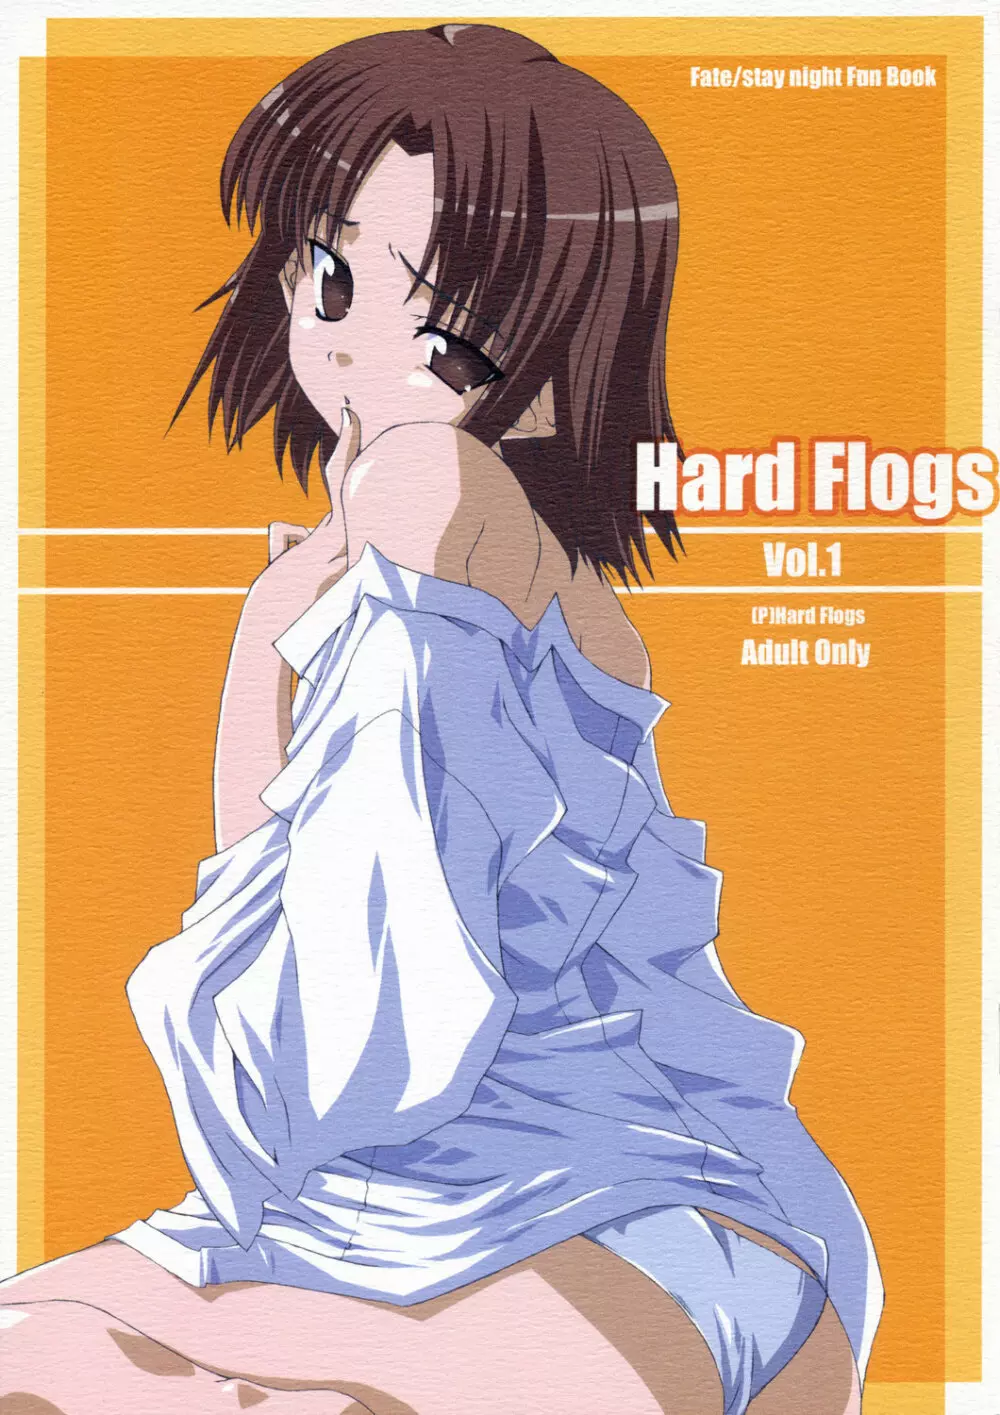 Hard Flogs Vol.1